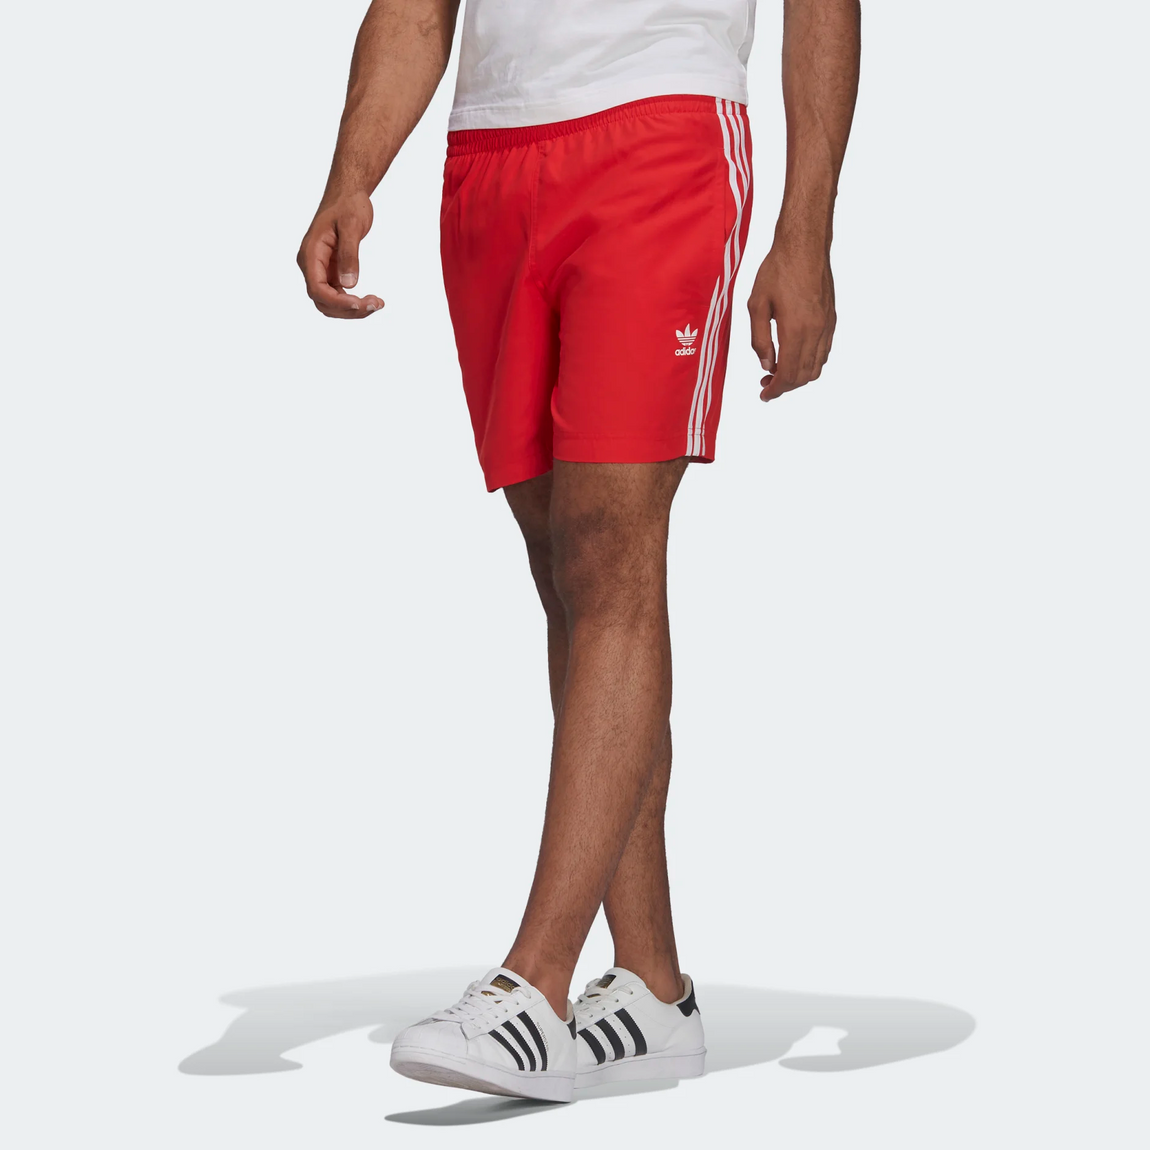 Adidas Classics 3-Stripes Swim Shorts (Vivid Red/White) - Adidas Classics 3-Stripes Swim Shorts (Vivid Red/White) - 